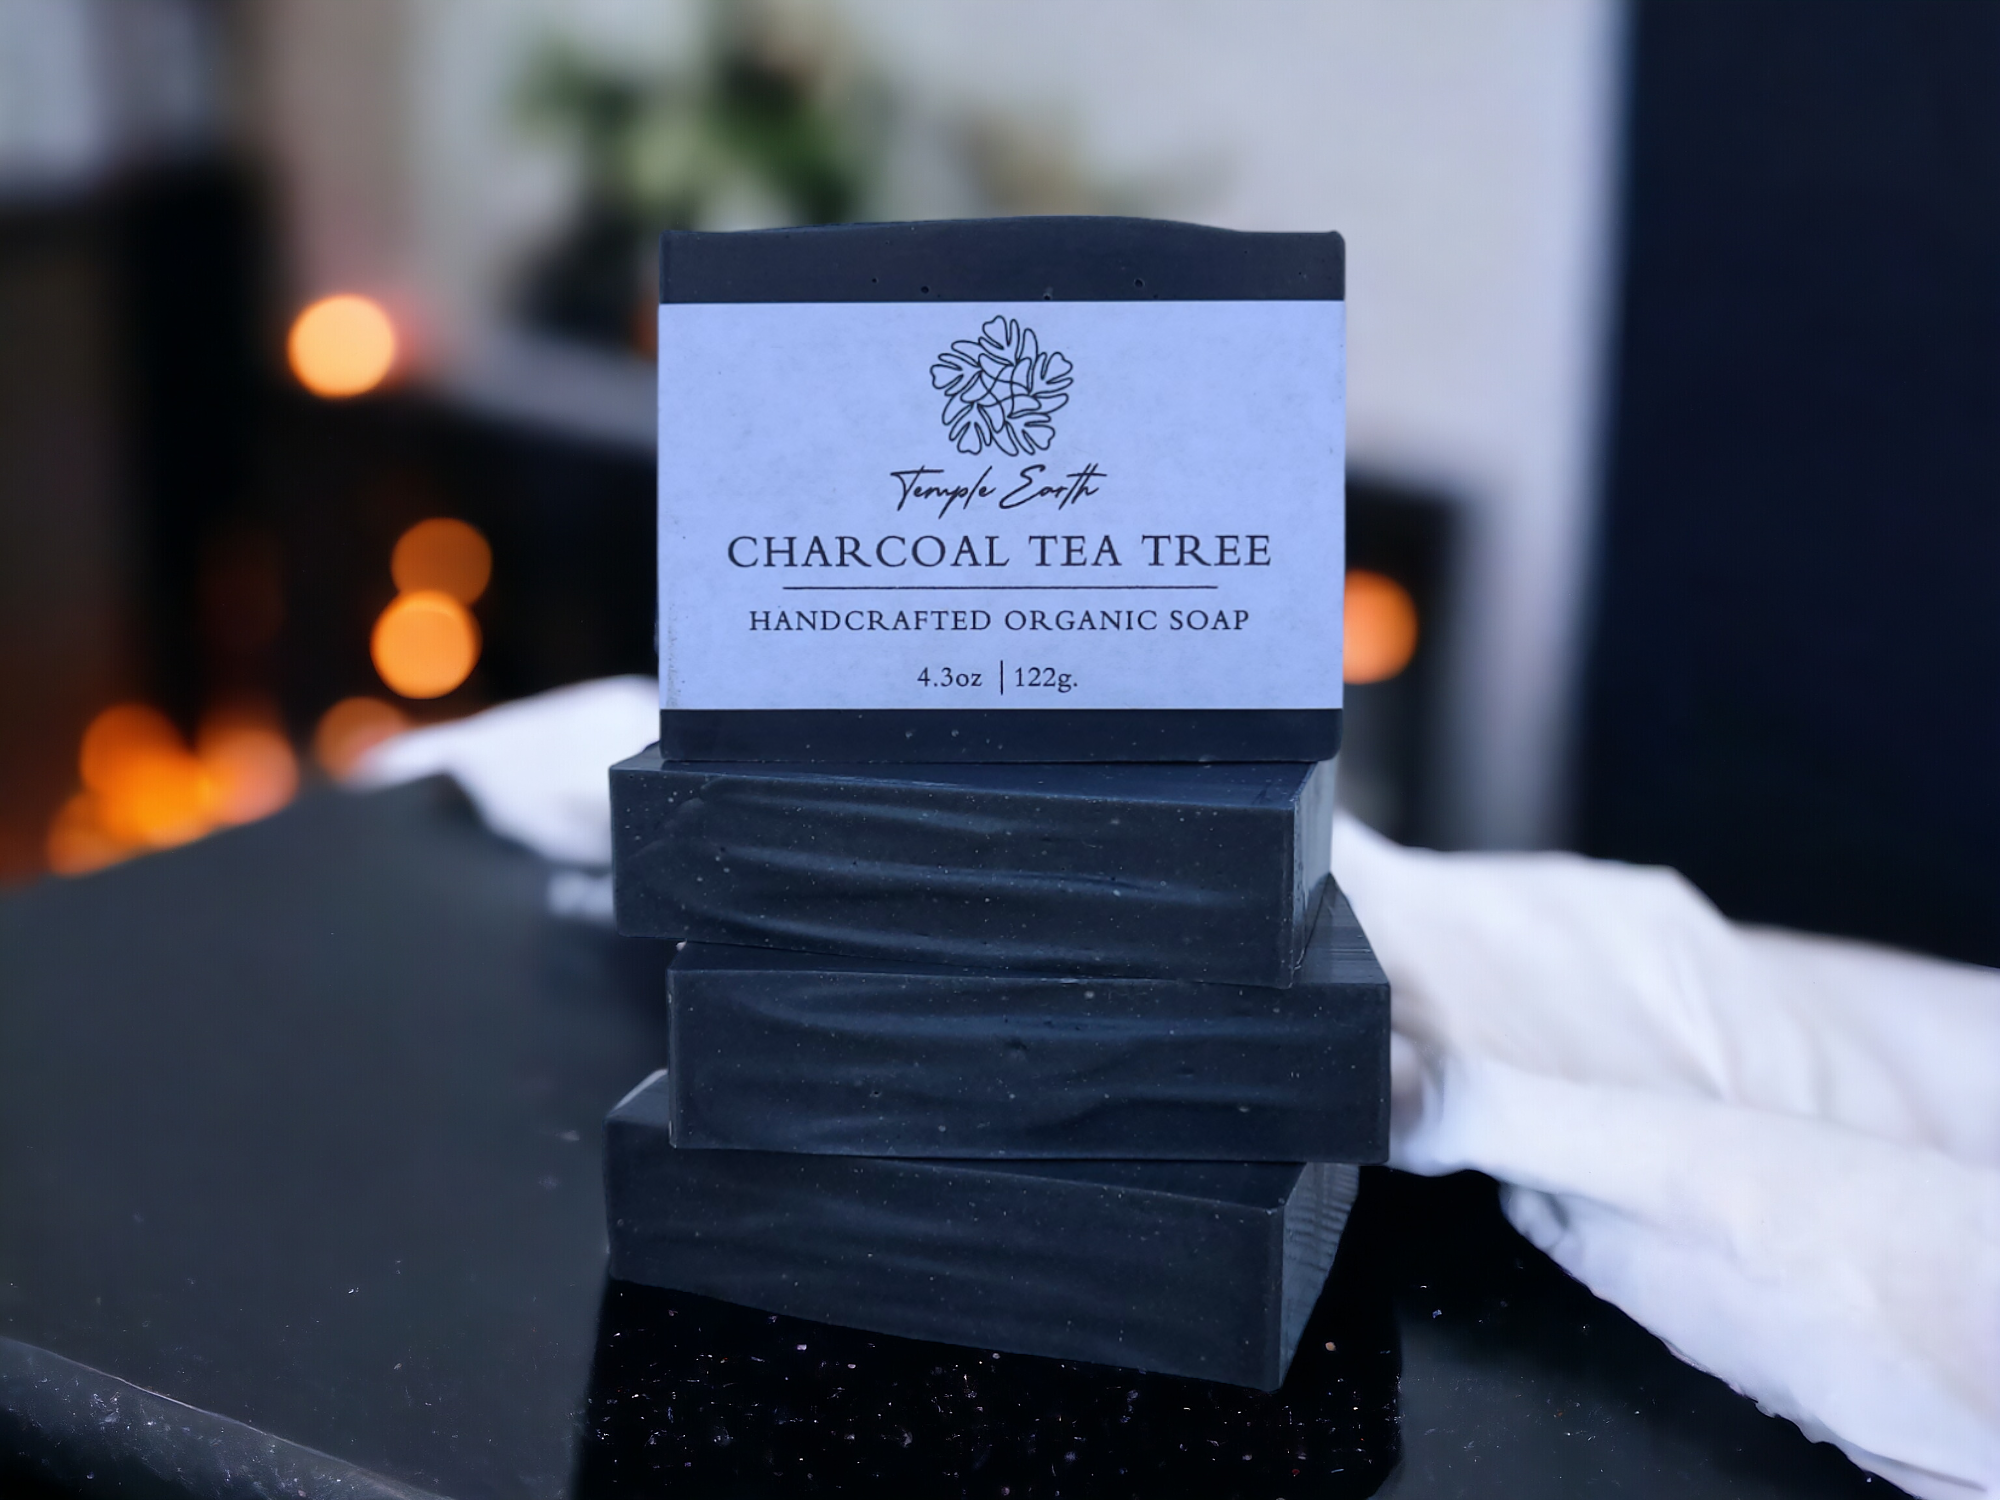 Charcoal Tea Tree Soap - Handcrafted Organic Soap photo